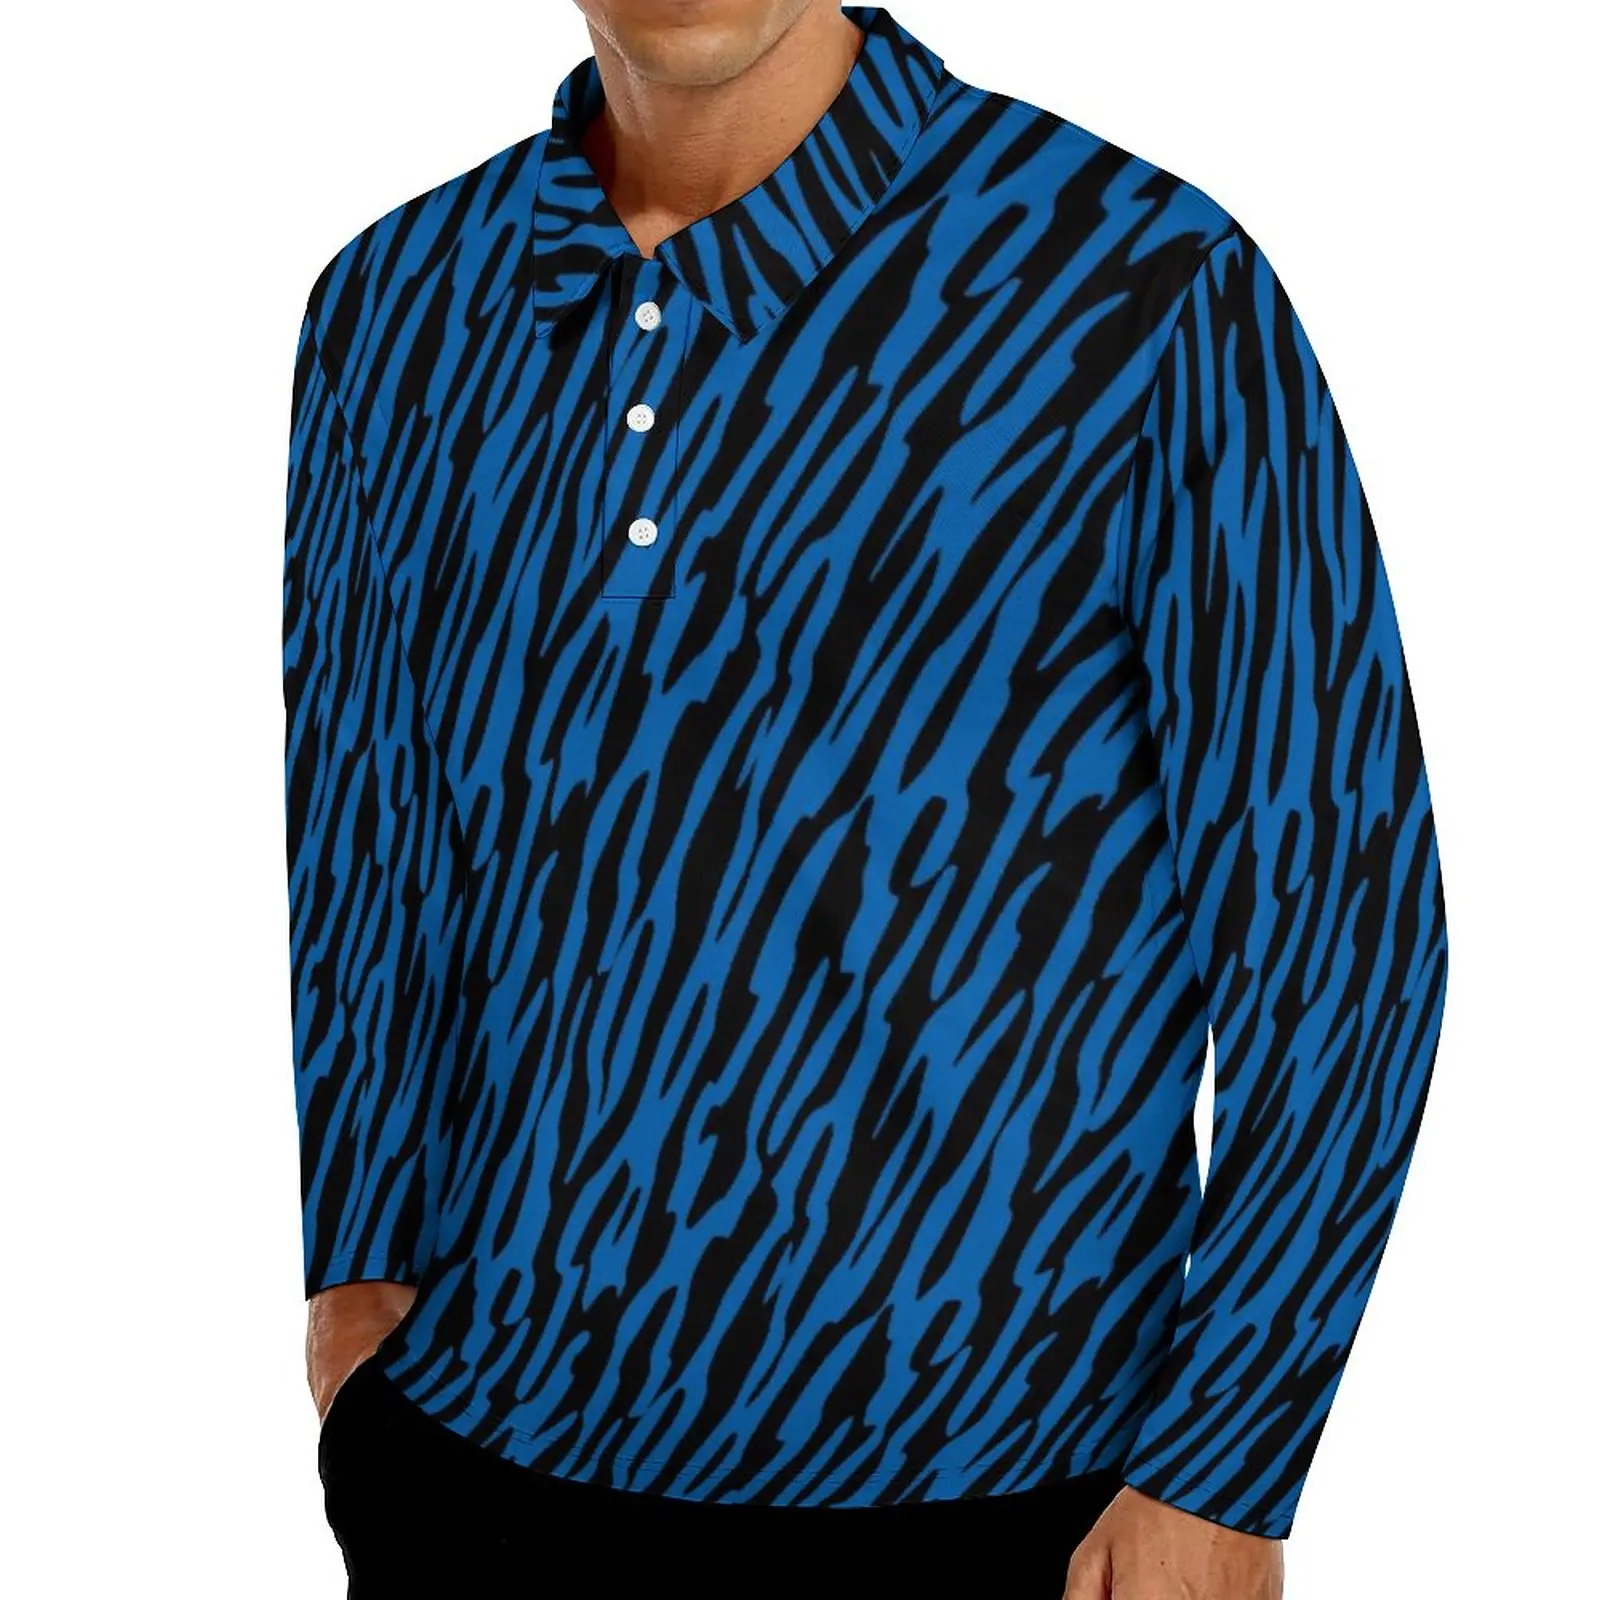 

Crazy Zebra Casual Polo Shirt Blue And Black Stripes T-Shirts Long Sleeve Design Shirt Streetwear Oversized Clothing Gift Idea